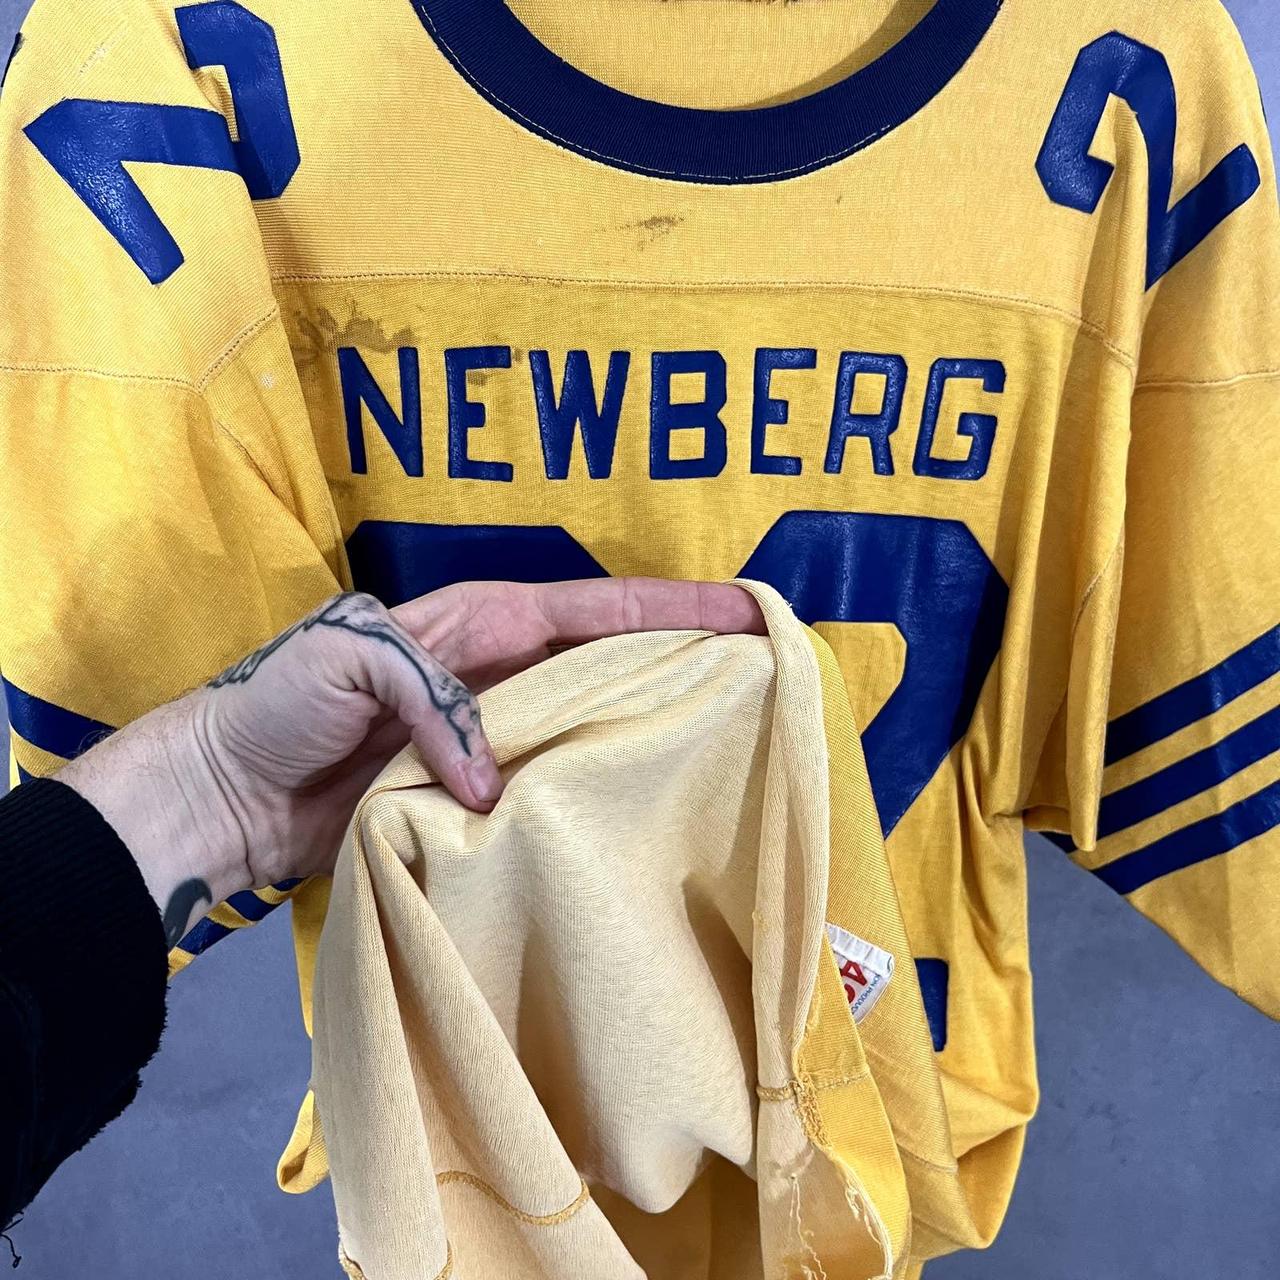 Vintage 60s NFL Rams Jersey Shirt 3/4 Sleeves - Depop